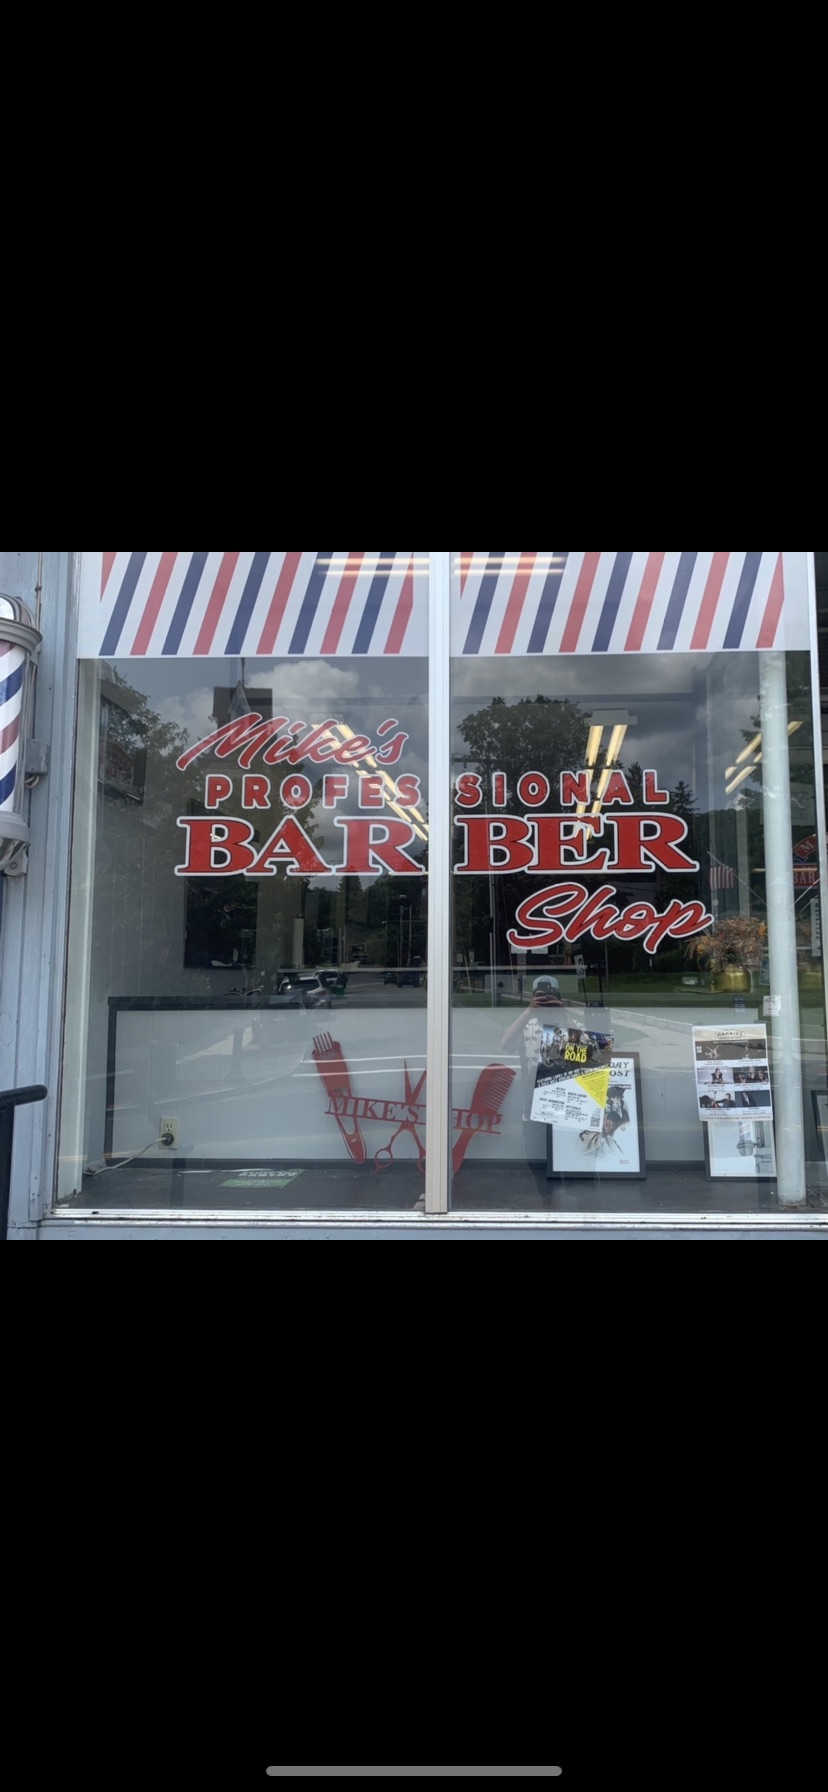 Mike’s Professional Barber Shop 91 Main St, Lee Massachusetts 01238